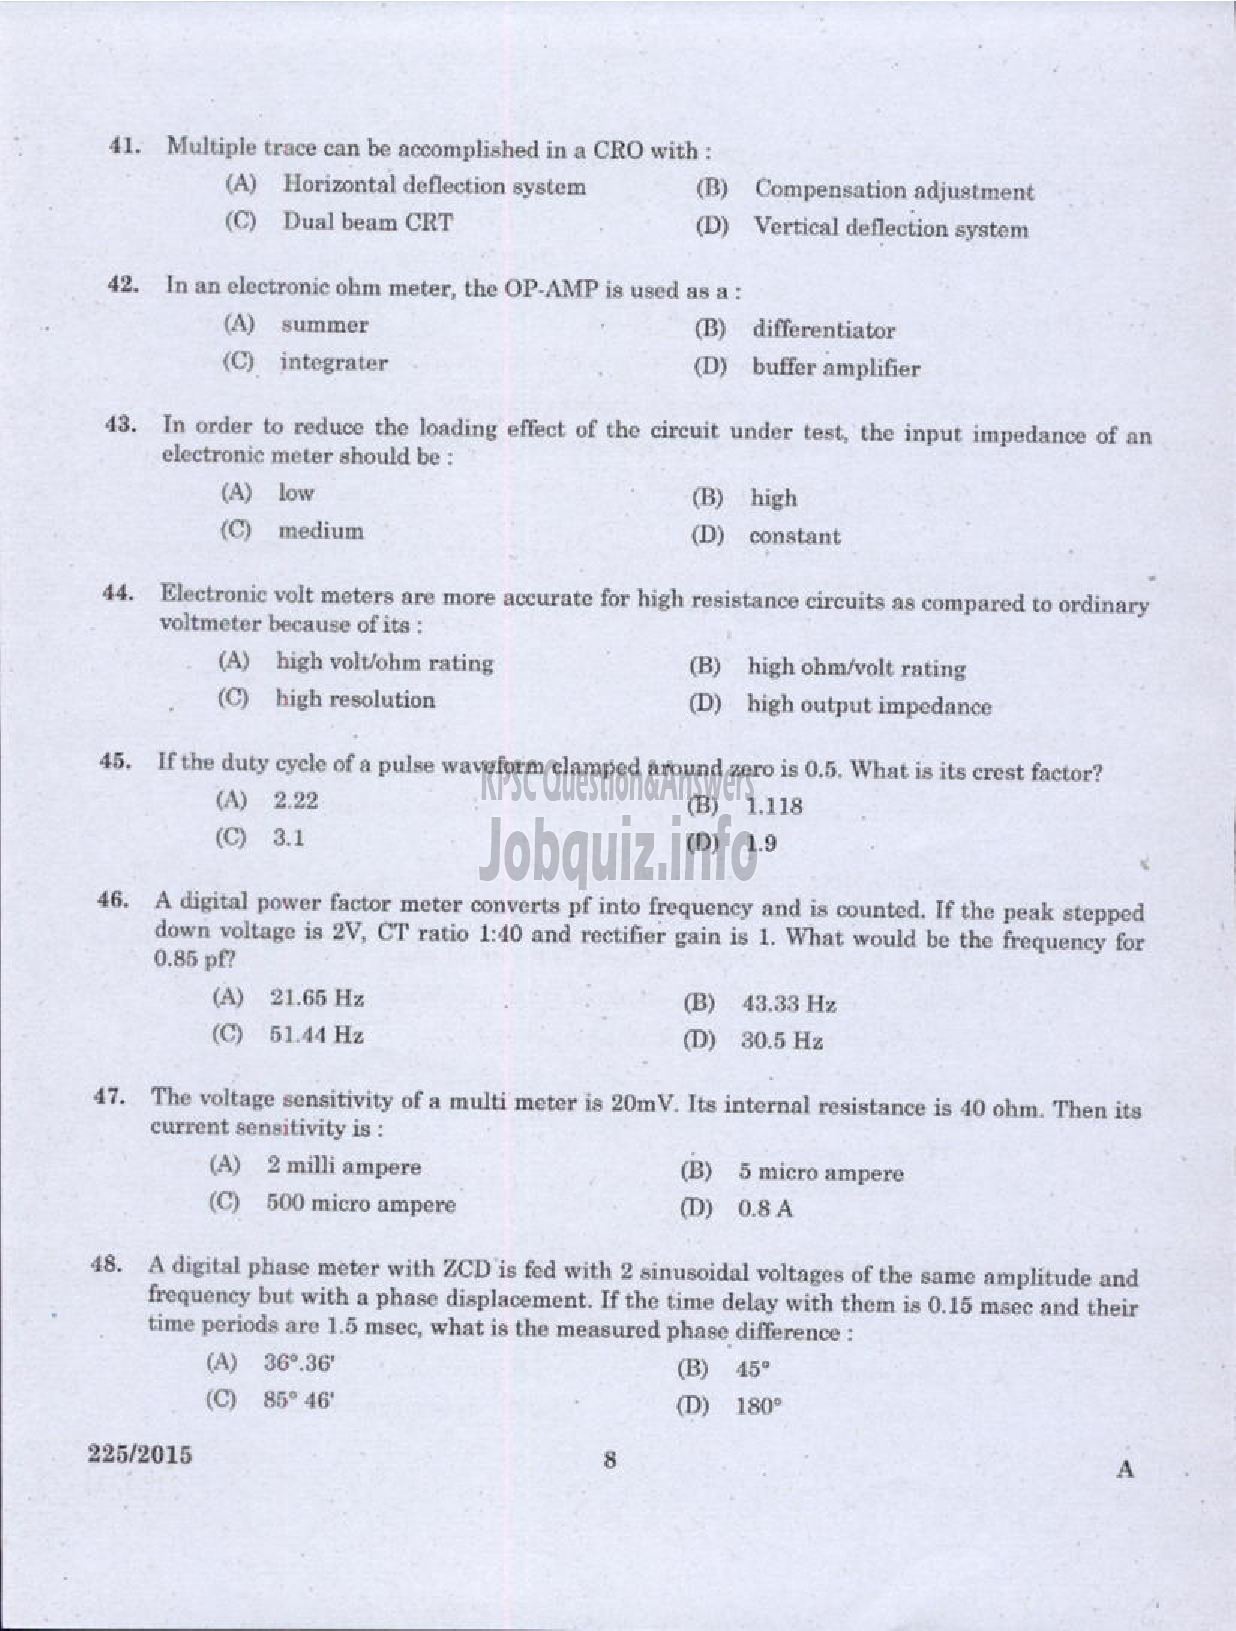 Kerala PSC Question Paper - VOCATIONAL TEACHER MAINTENANCE AND REPAIRS OF DOMESTIC APPLIANCES VHSE-6